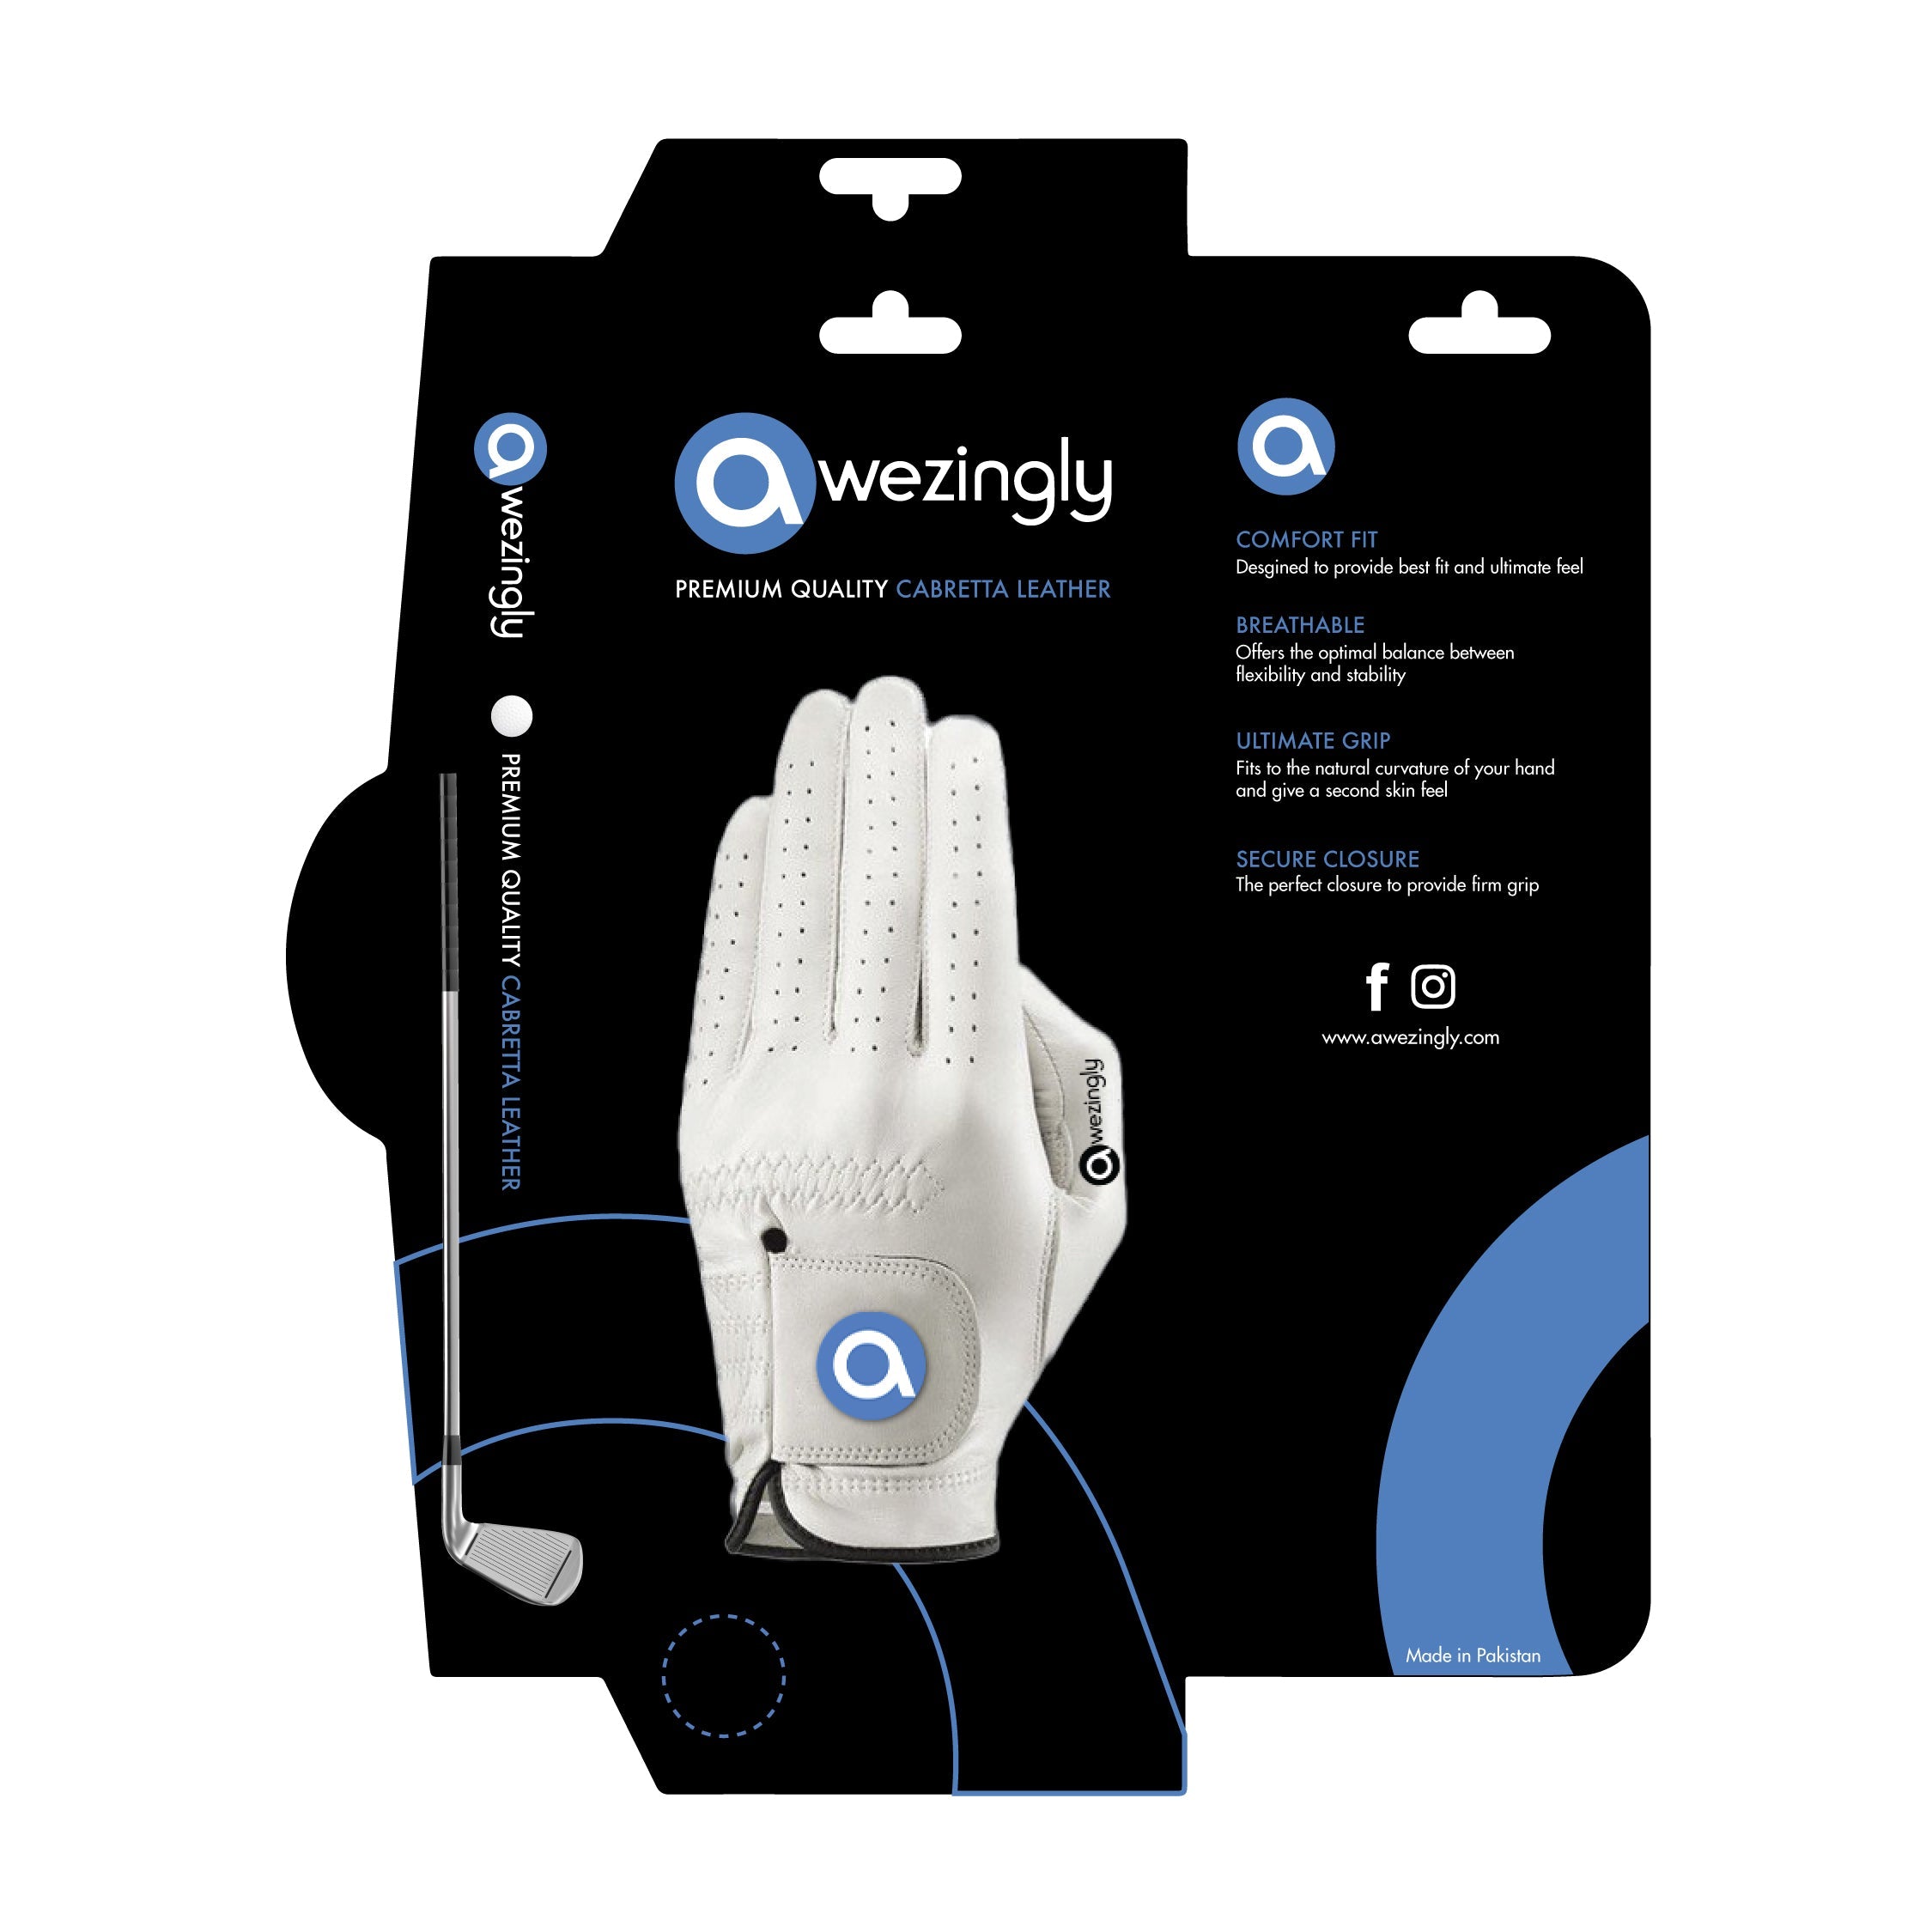 Awezingly Premium Quality Cabretta Leather Golf Glove for Men - White (L)